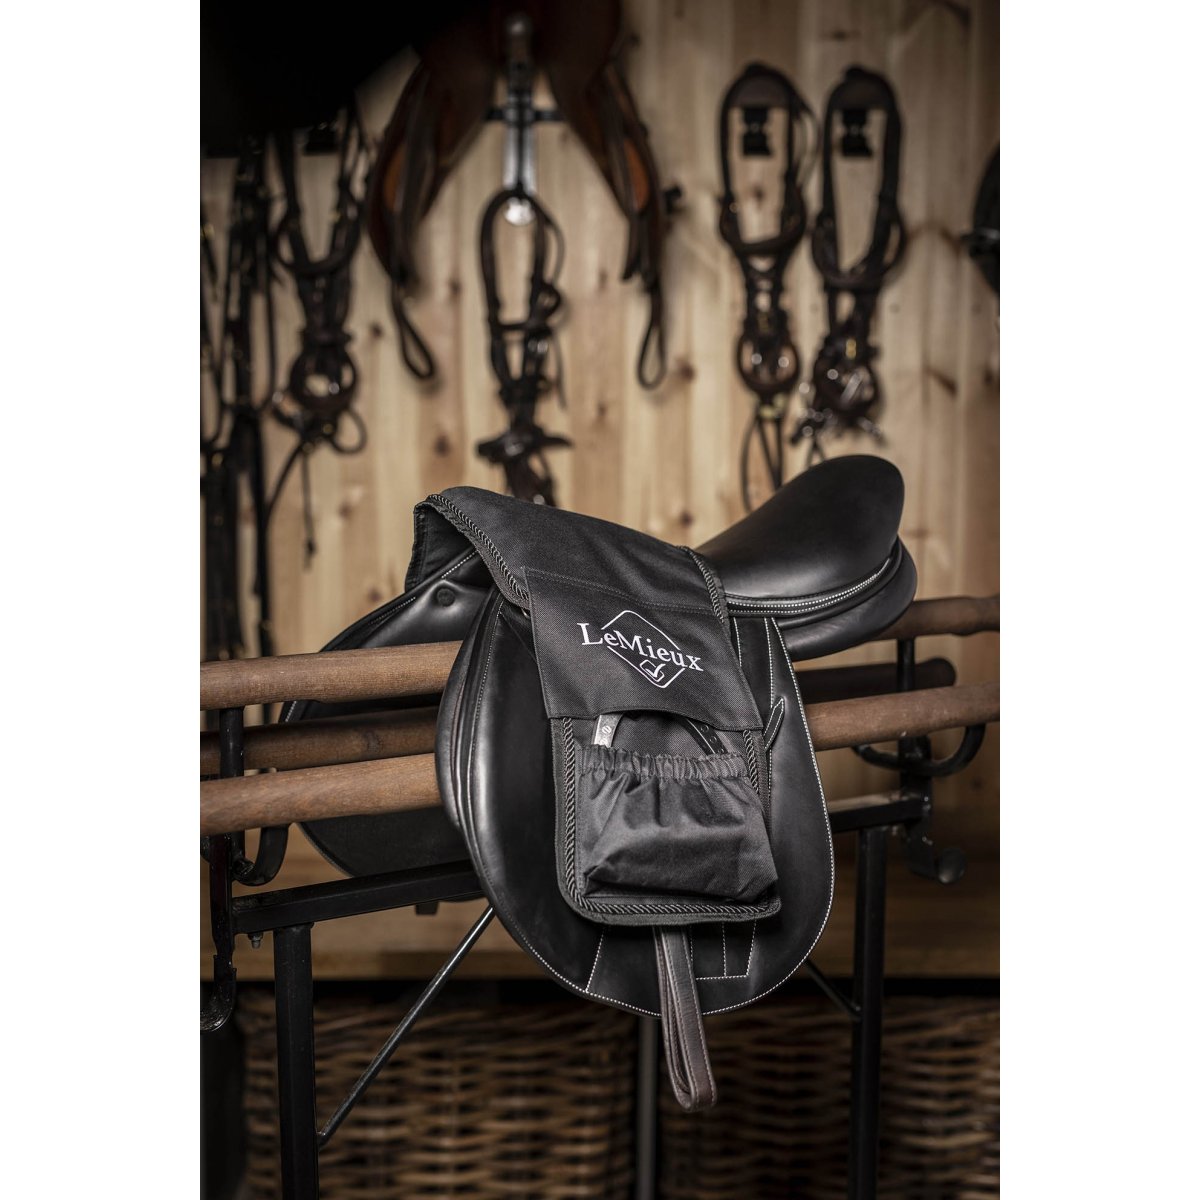 Black stirrup leathers on saddle, equestrian tack room background.